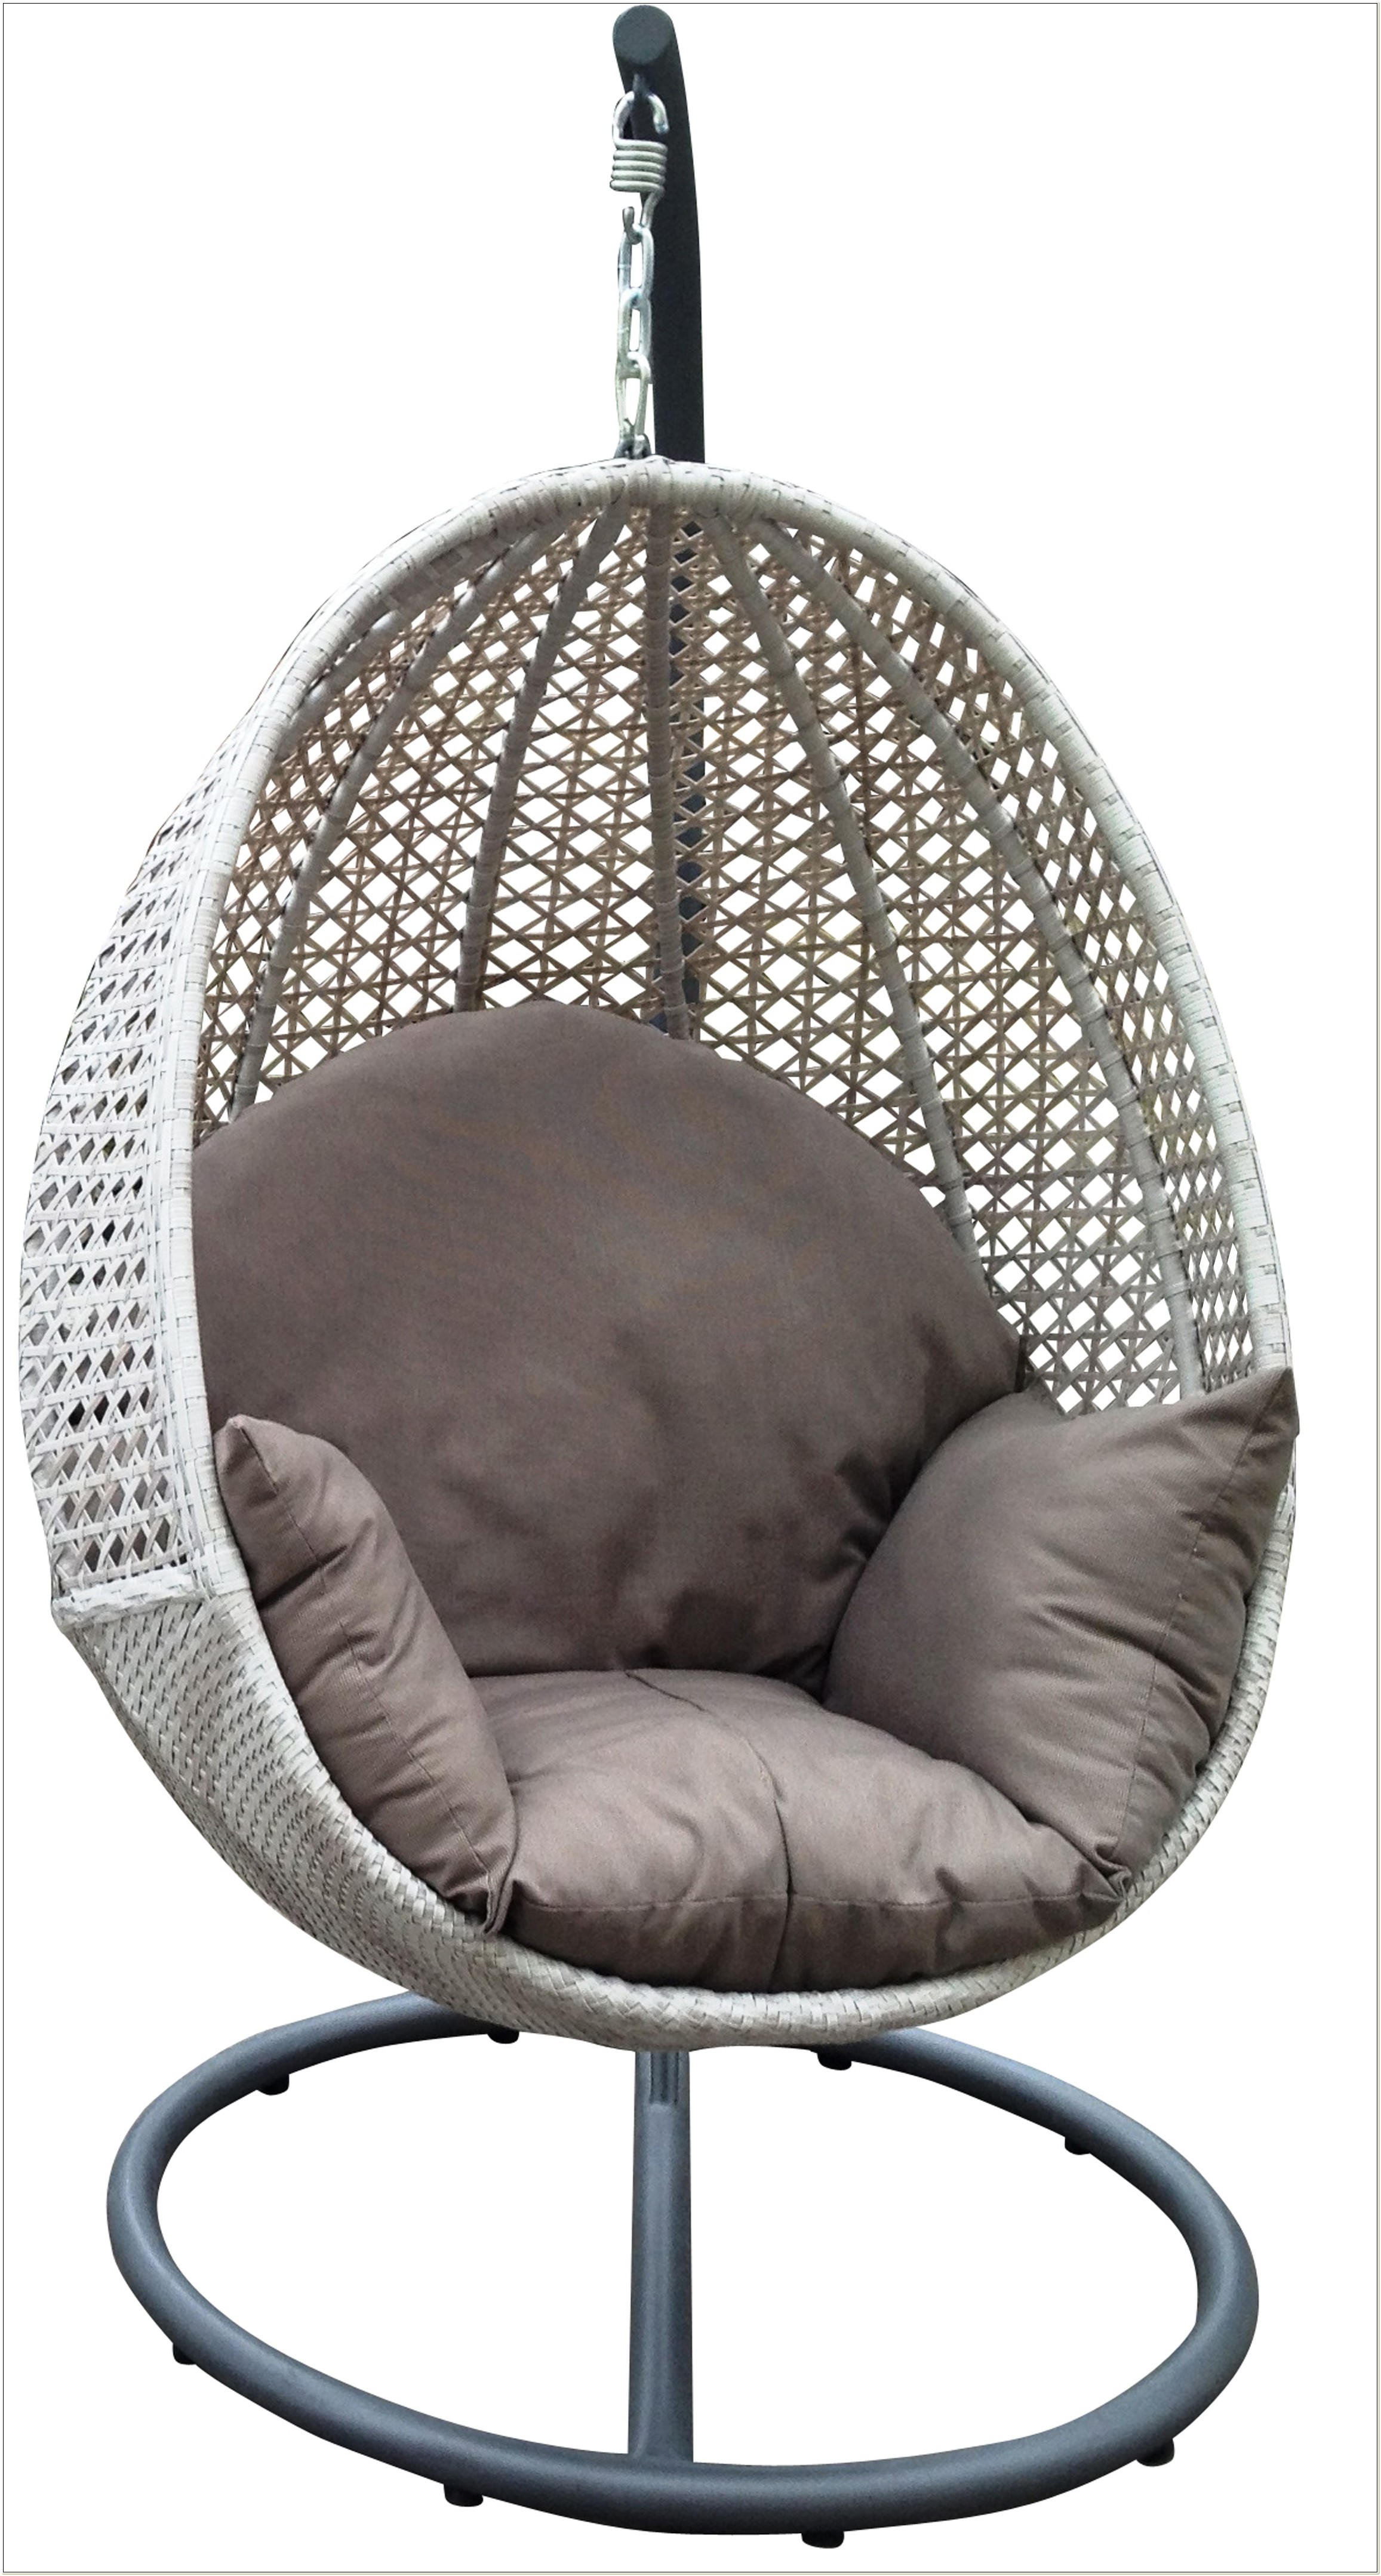 Cheap Hanging Egg Chair Australia - Chairs : Home Decorating Ideas #